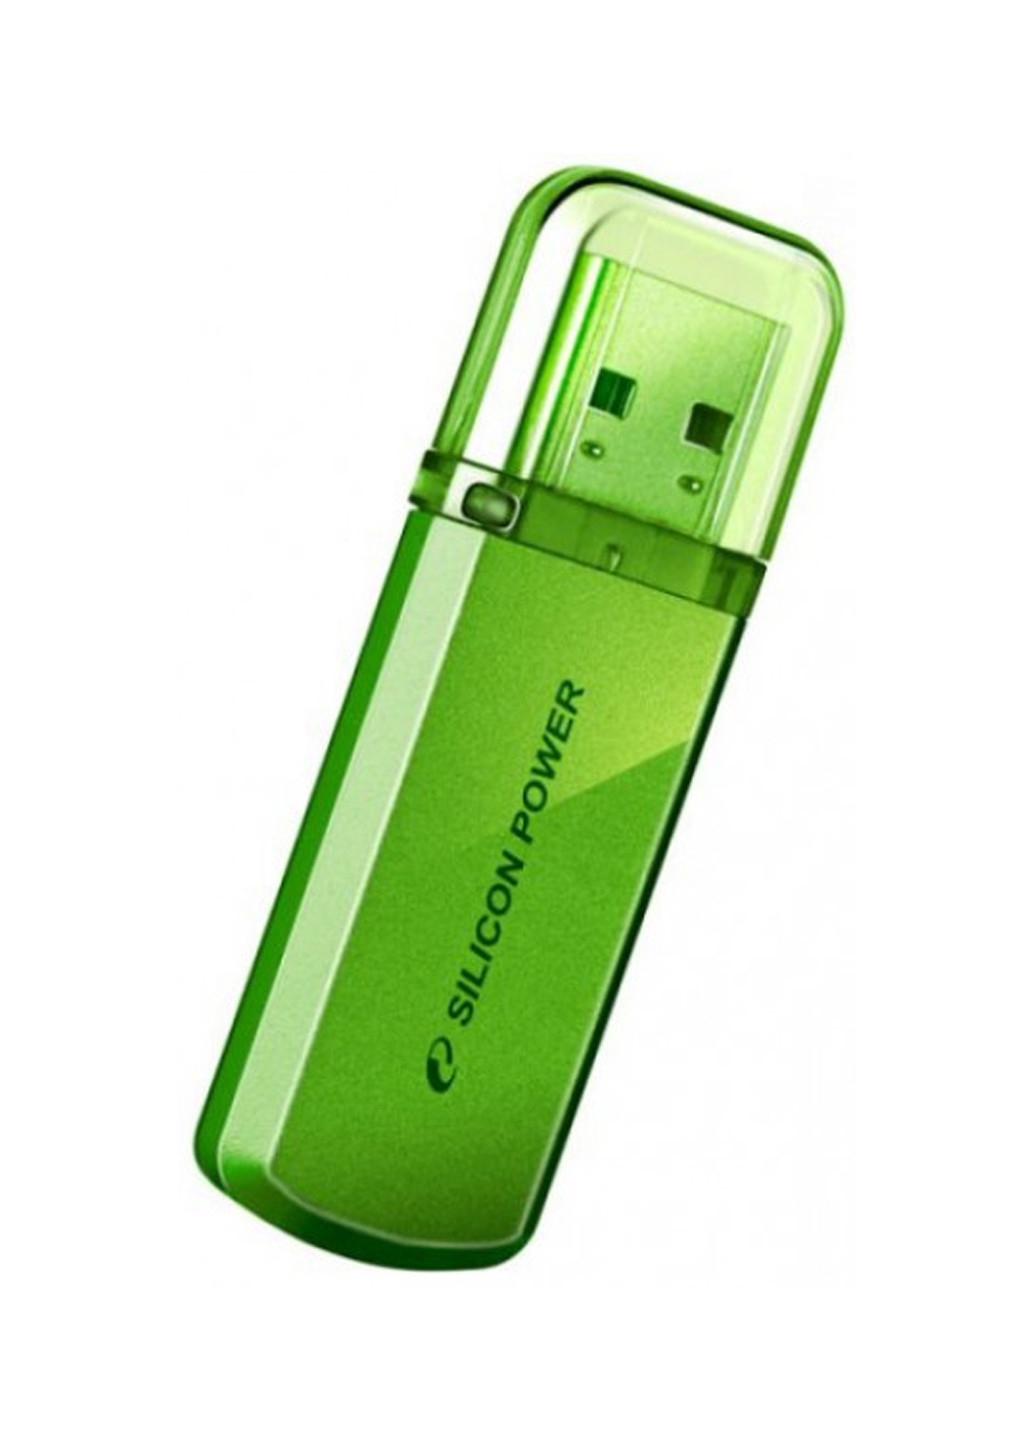 Флеш память USB Helios 101 16GB Green (SP016GBUF2101V1N) Silicon Power флеш память usb silicon power helios 101 16gb green (sp016gbuf2101v1n) (132007758)